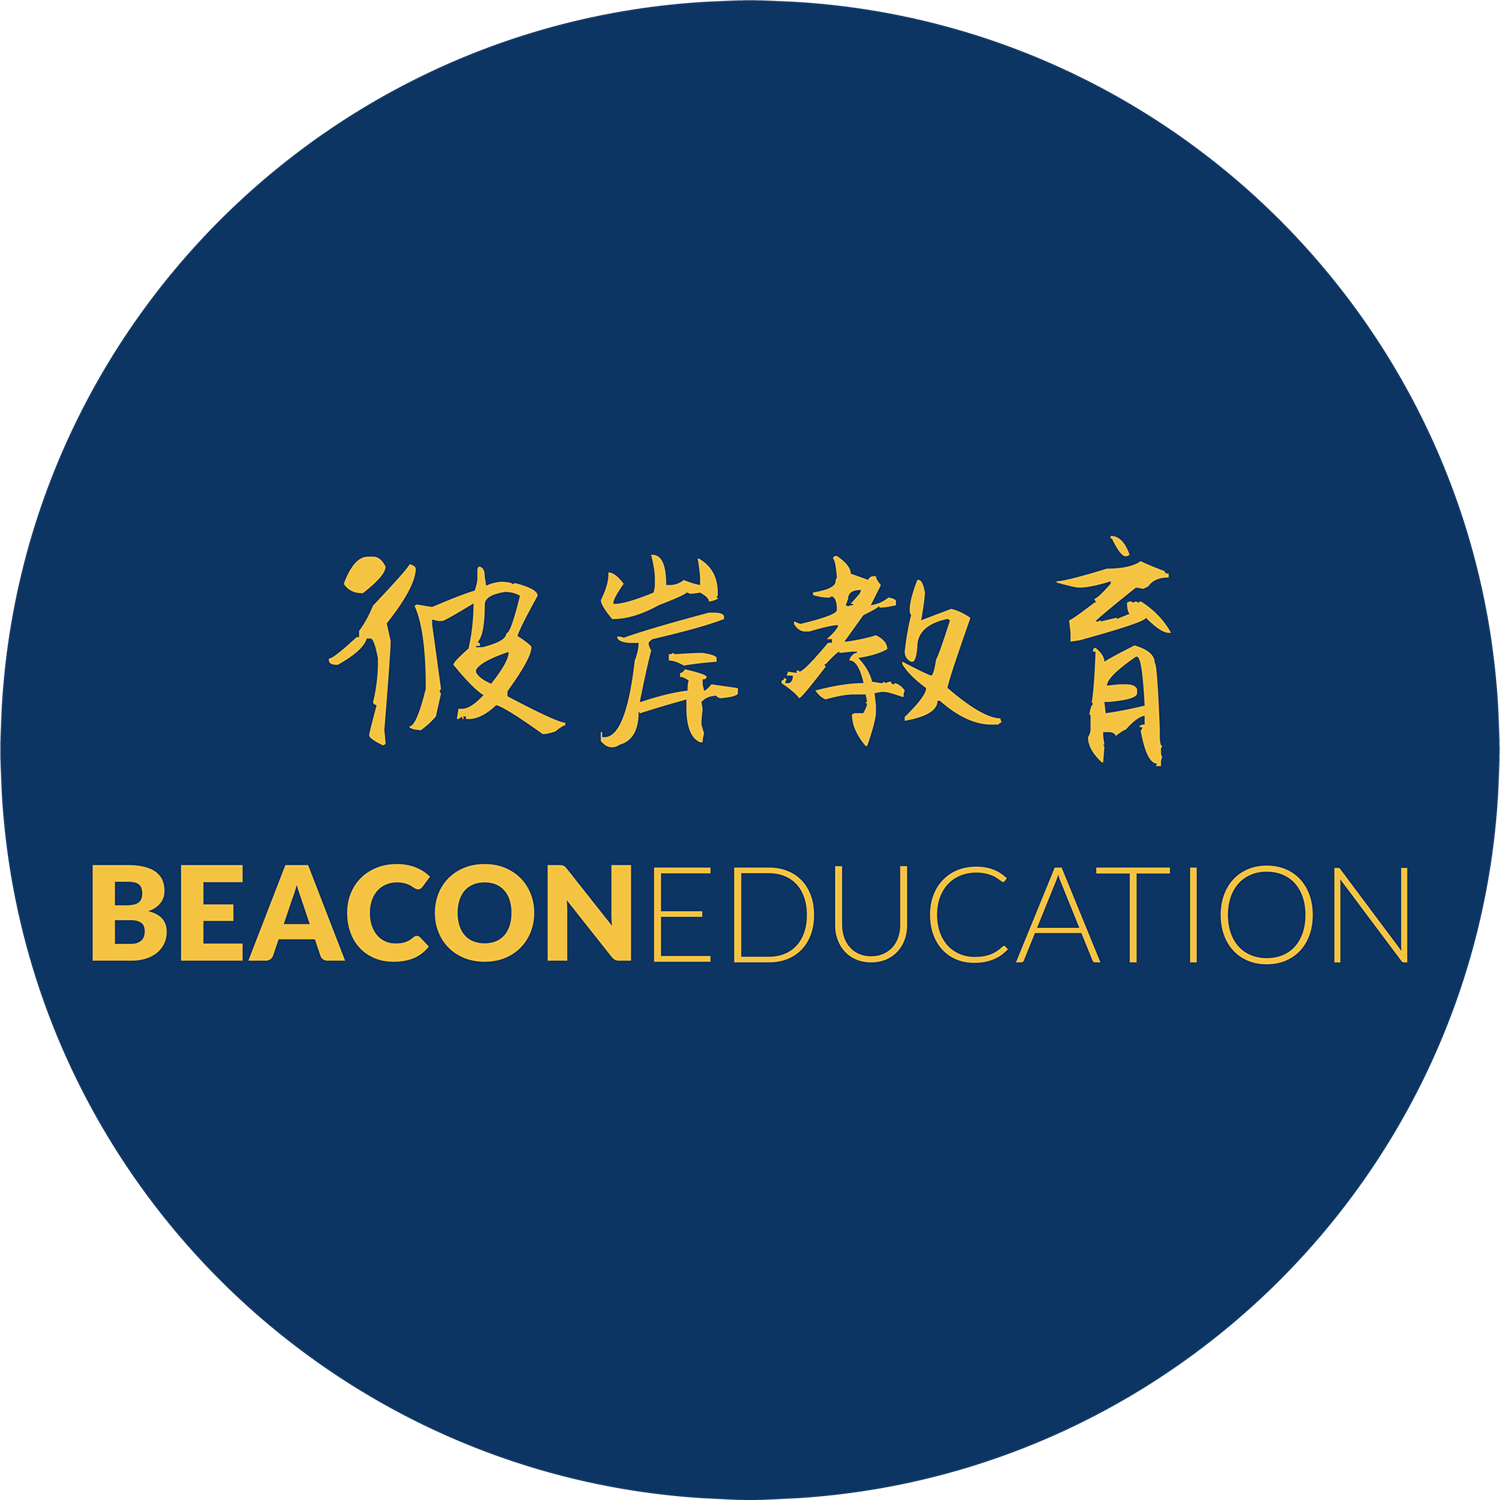 彼岸教育logo  圆形.png